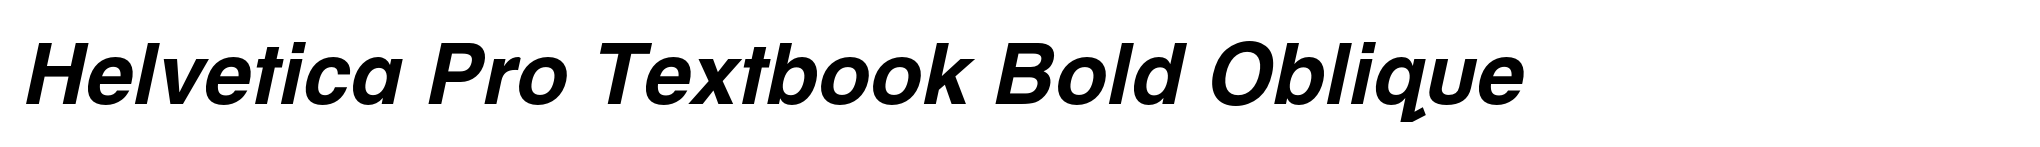 Helvetica Pro Textbook Bold Oblique image